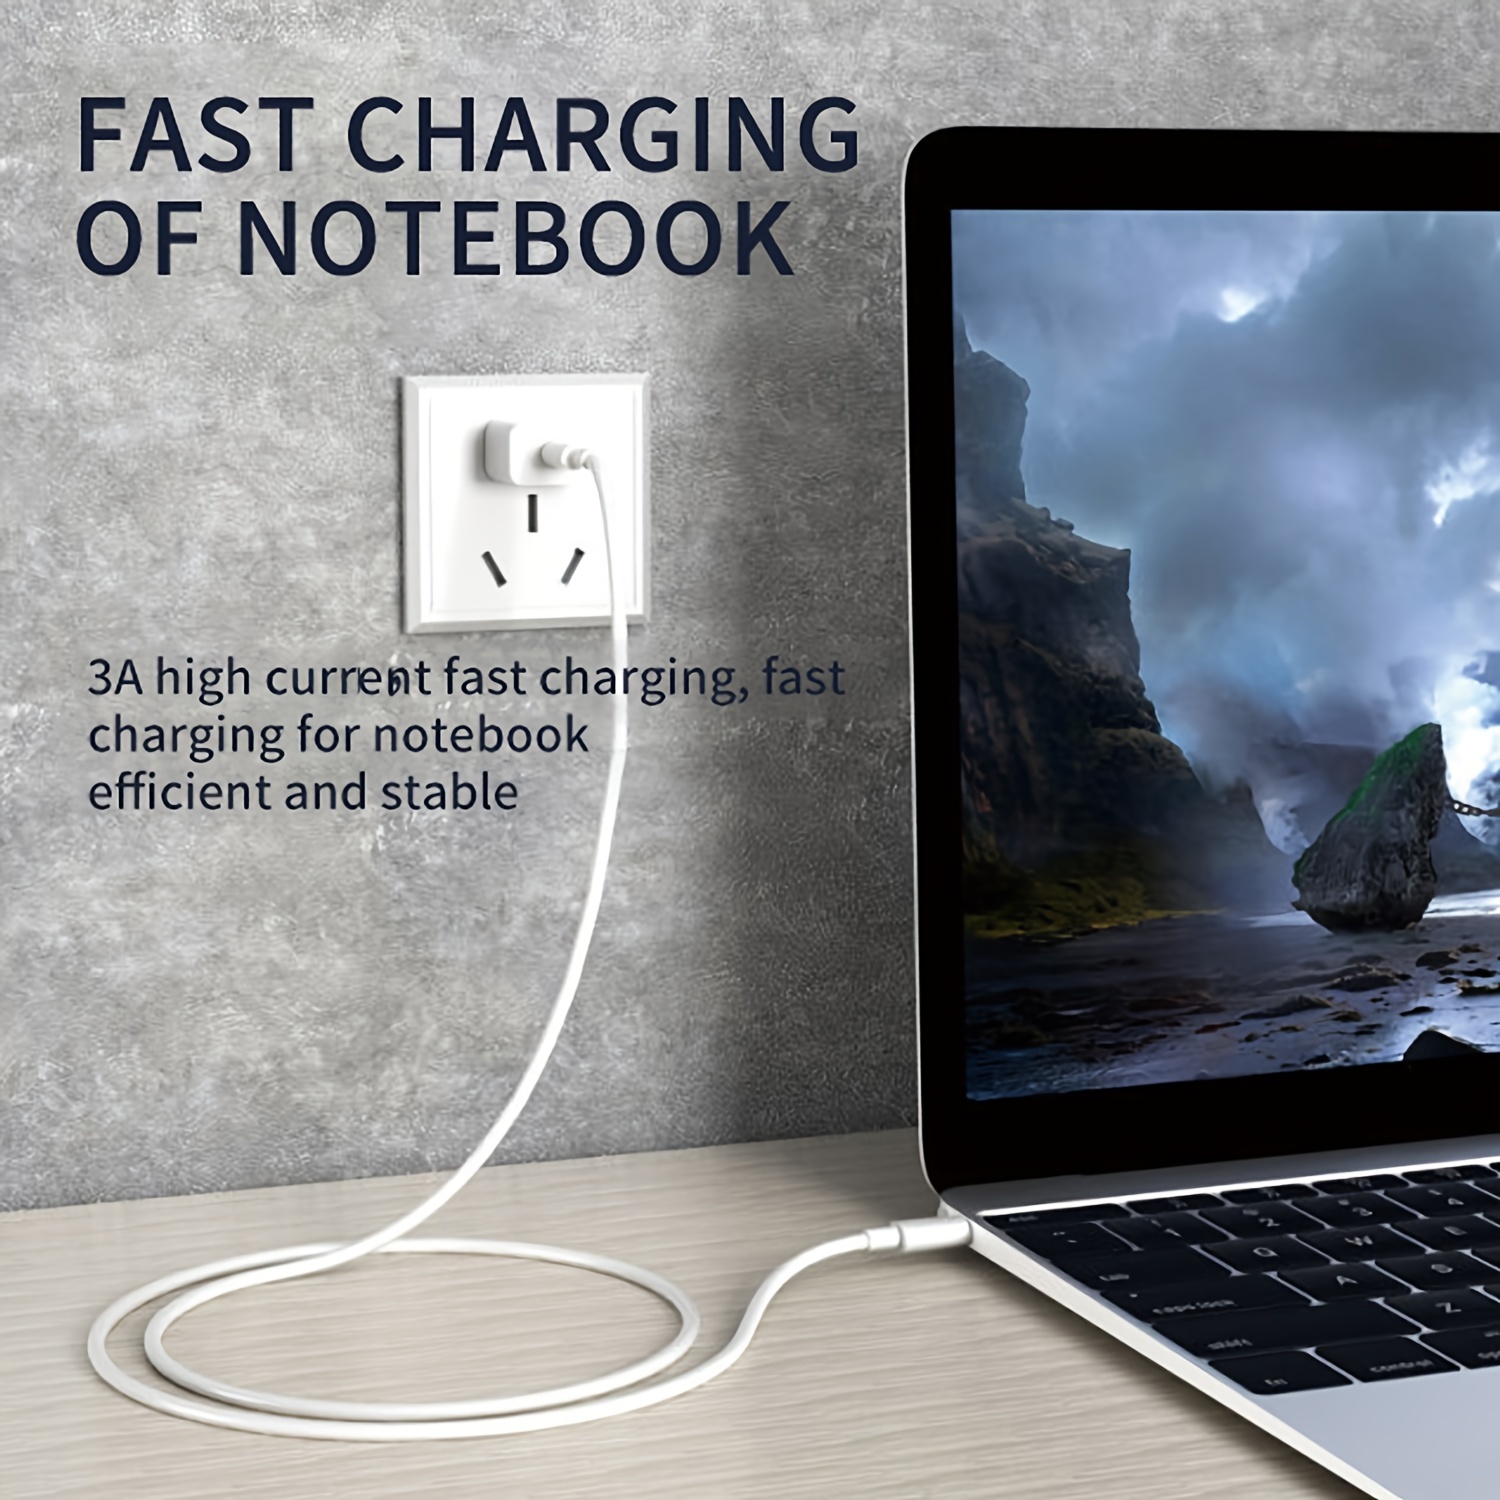 Type C charging cable for Macbook, Macbook Air or Macbook Pro